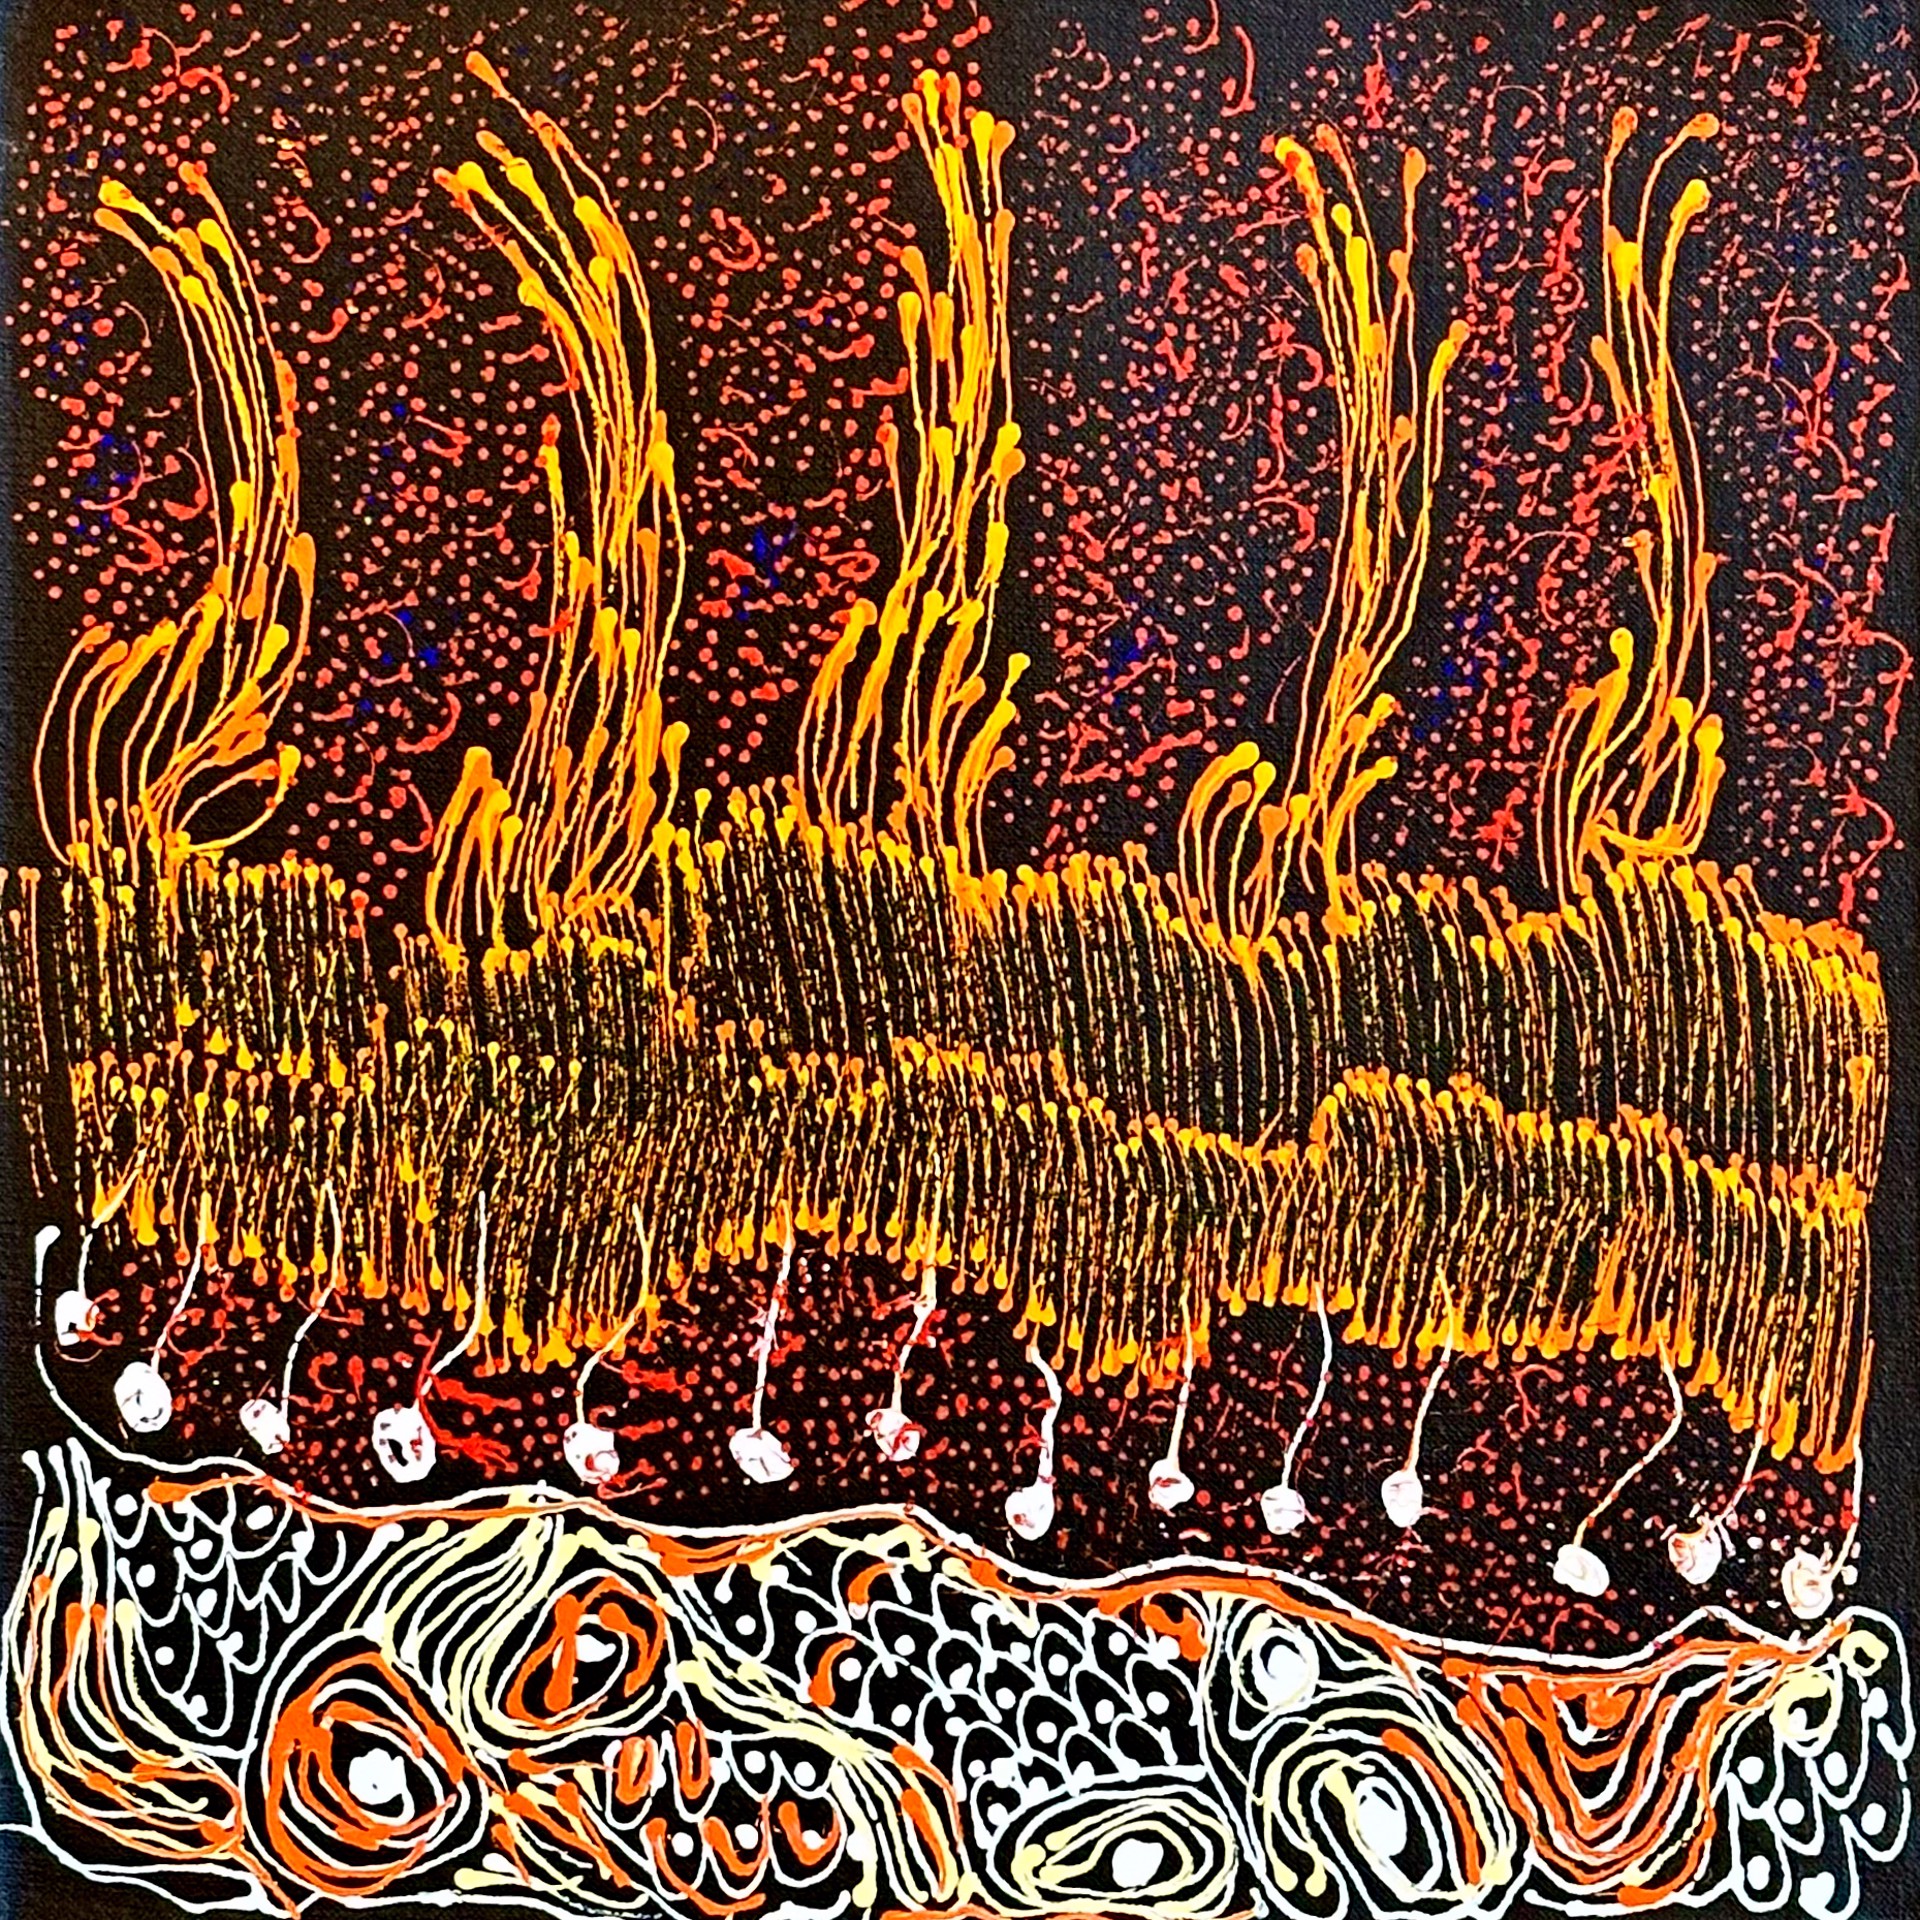 Waru Tjukurrpa - Fire Dreaming by Jorna Newberry